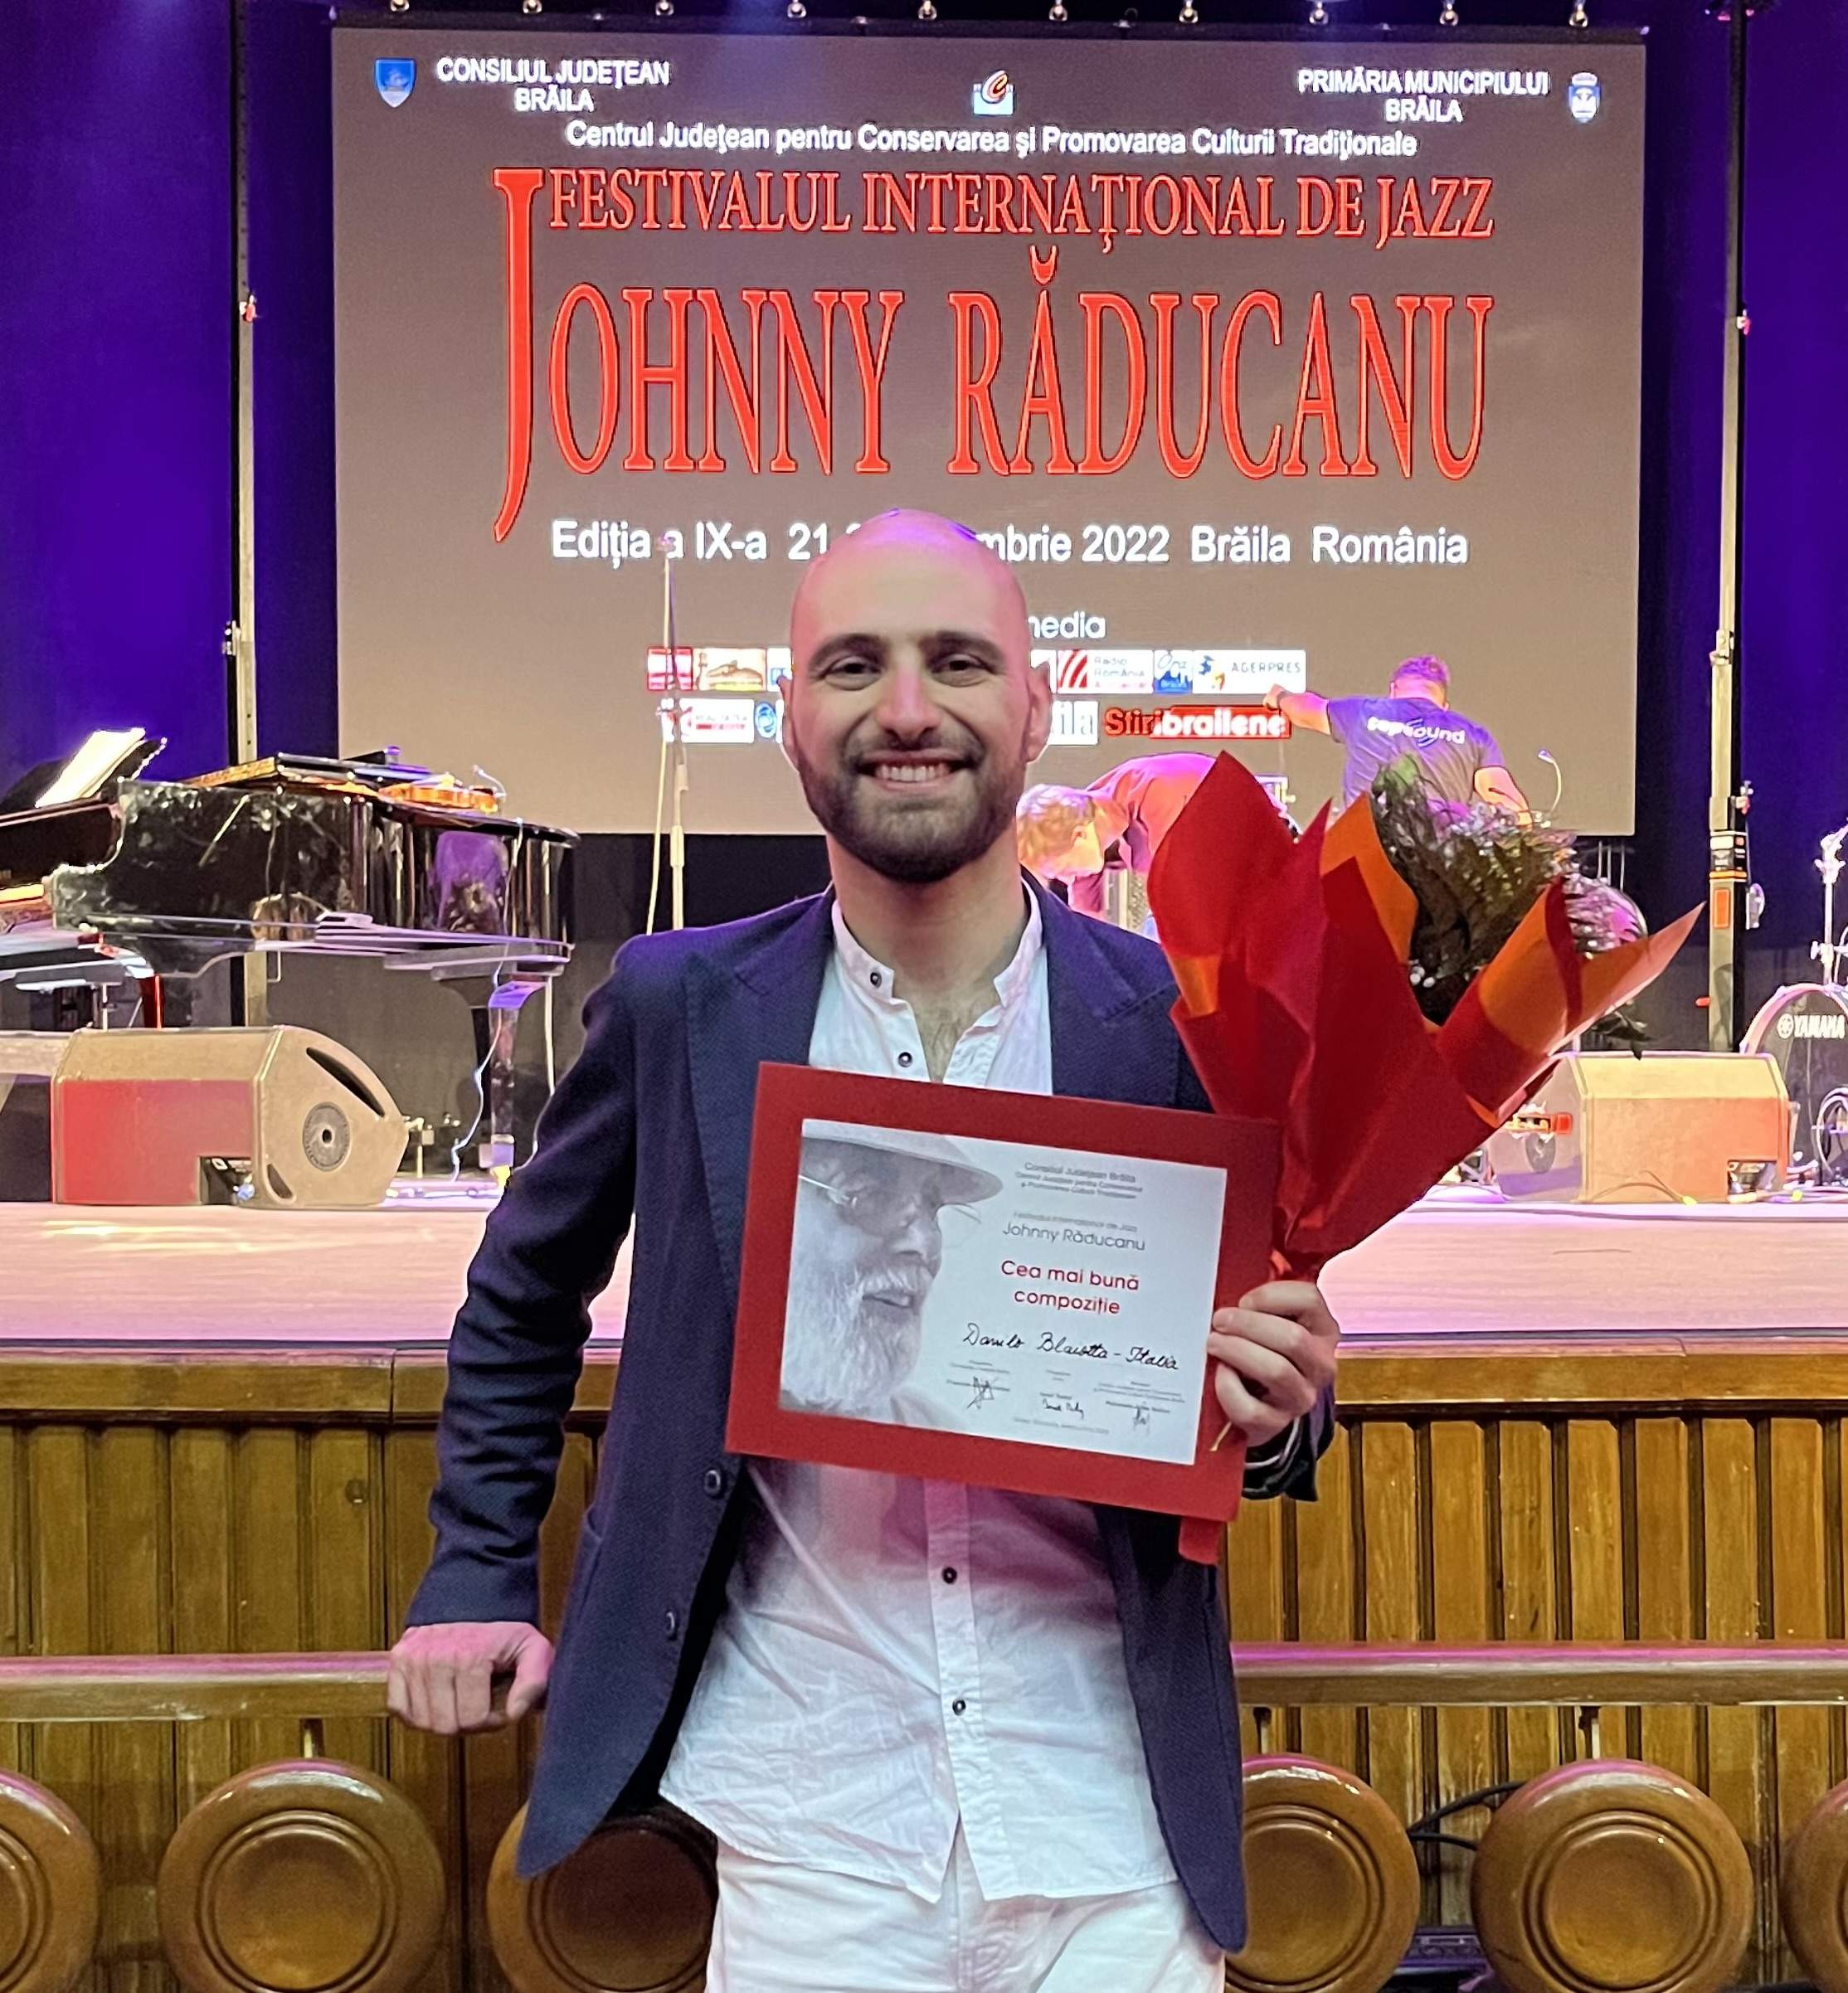 Danilo Blaiotta wins the Prize for Best Composer at the Johnny Raducanu International Jazz Festival! (Braila / Romania)